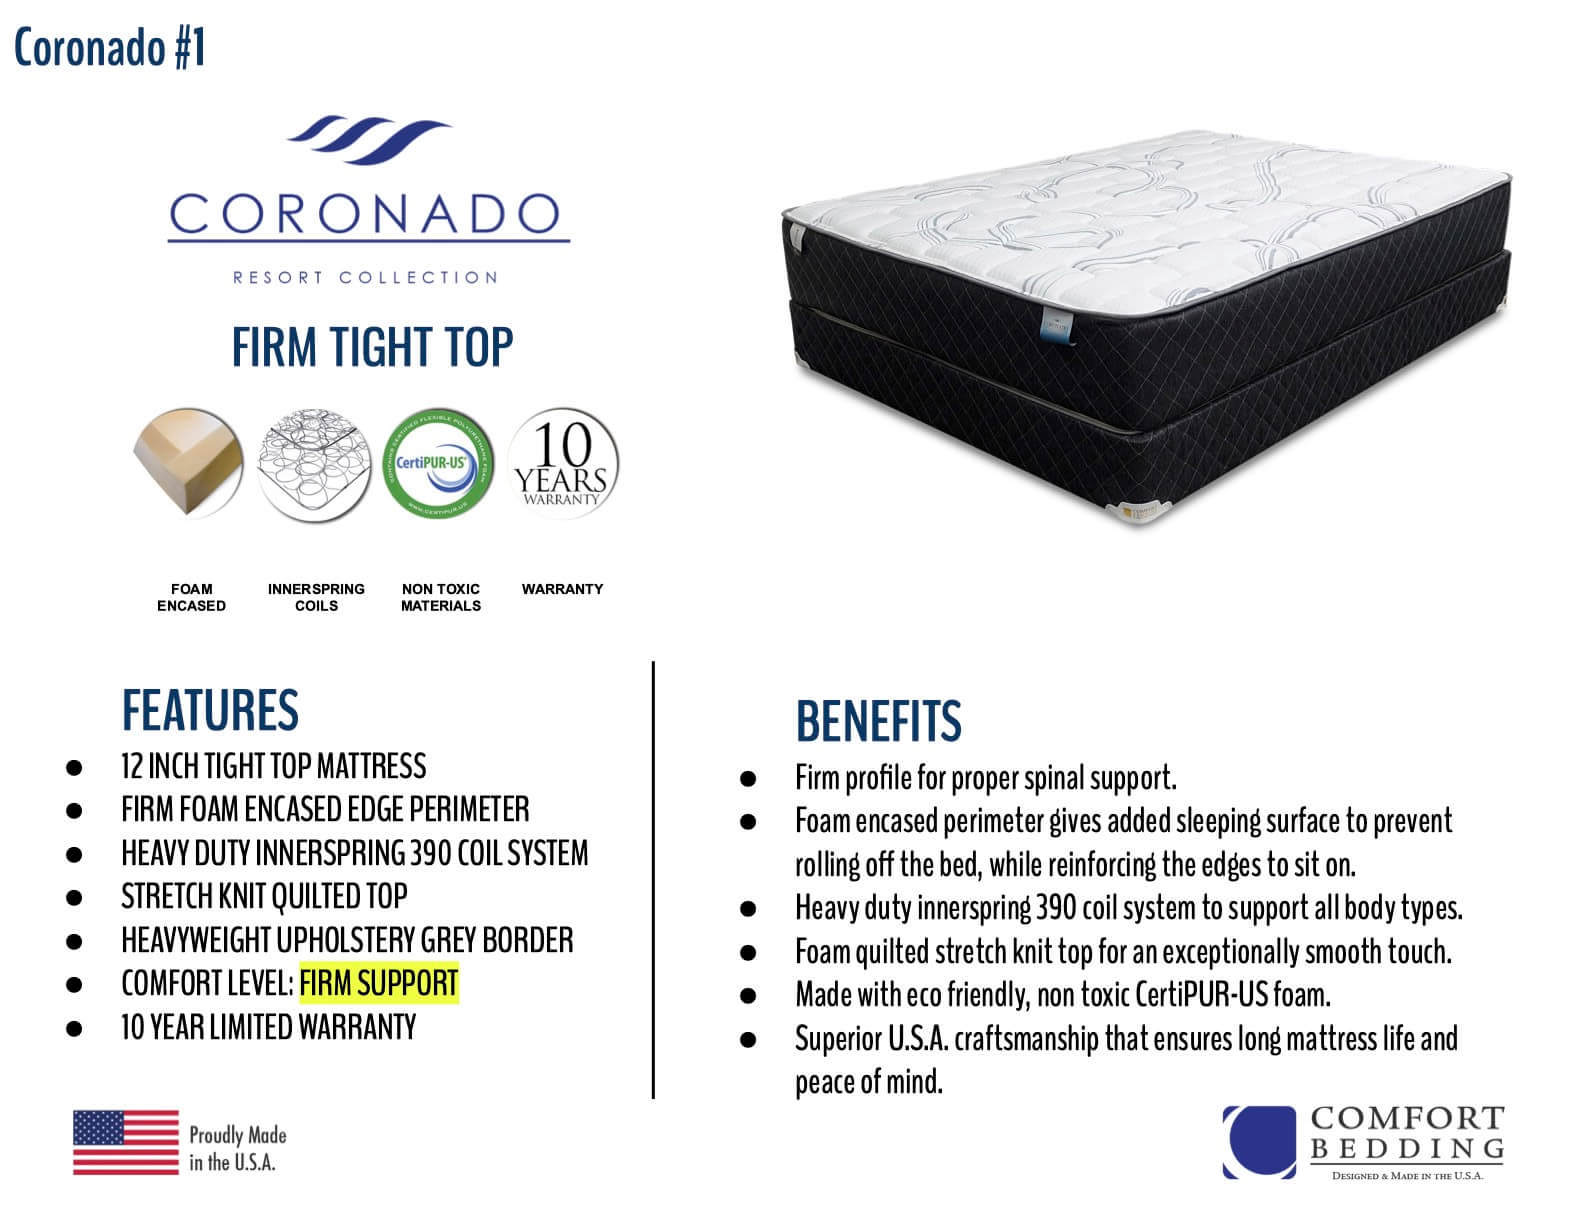 Coronado Firm Tight Top Mattress By Comfort Bedding